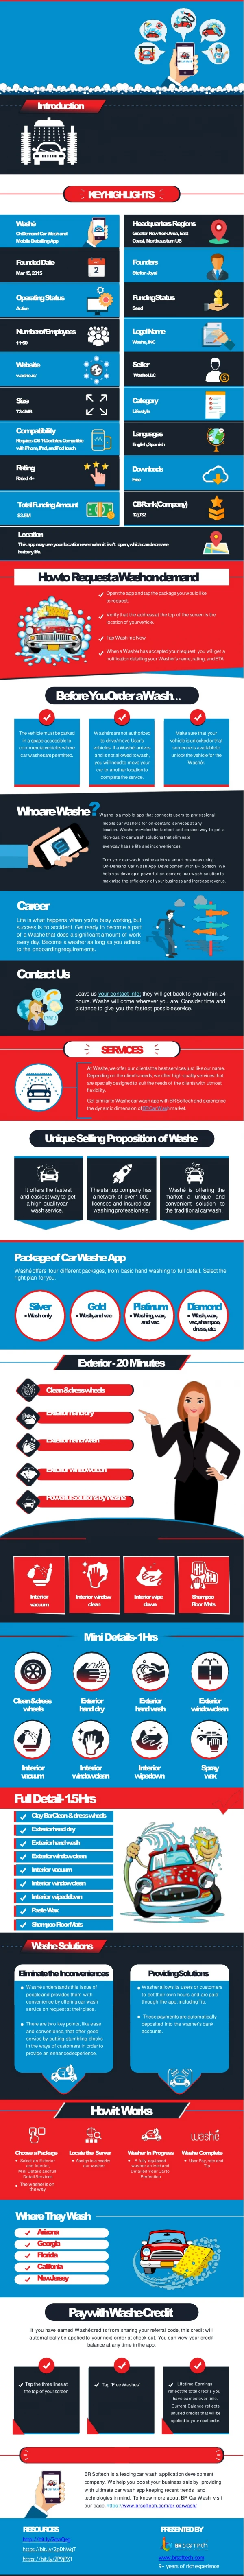 Washe on demand car wash app success story